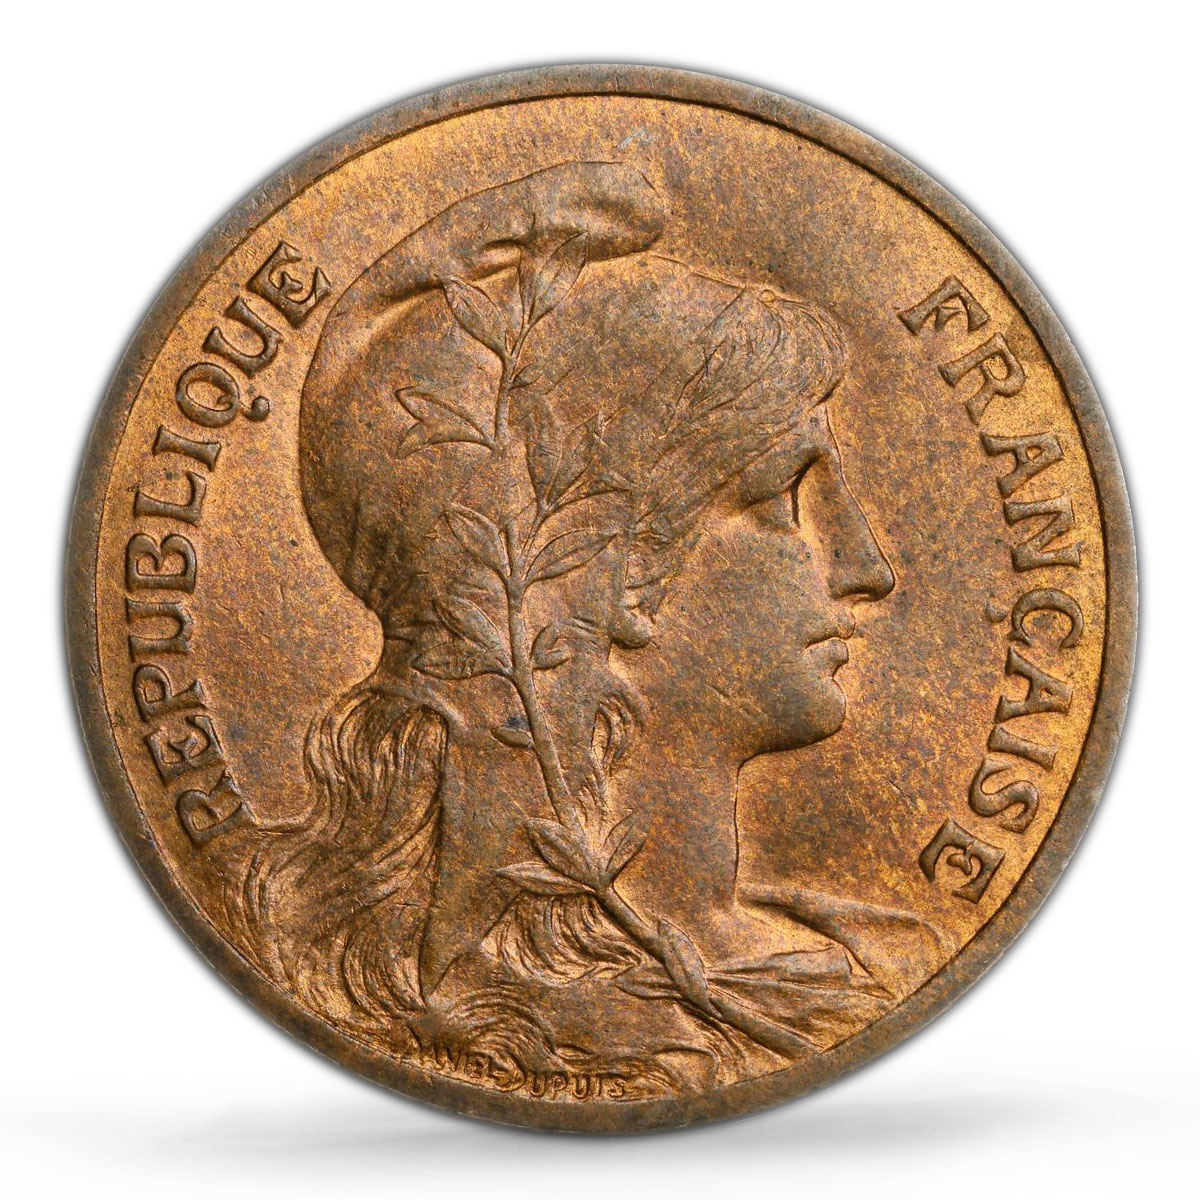 France 5 centimes Republic Liberty Head KM-842 MS63RB PCGS bronze coin 1900